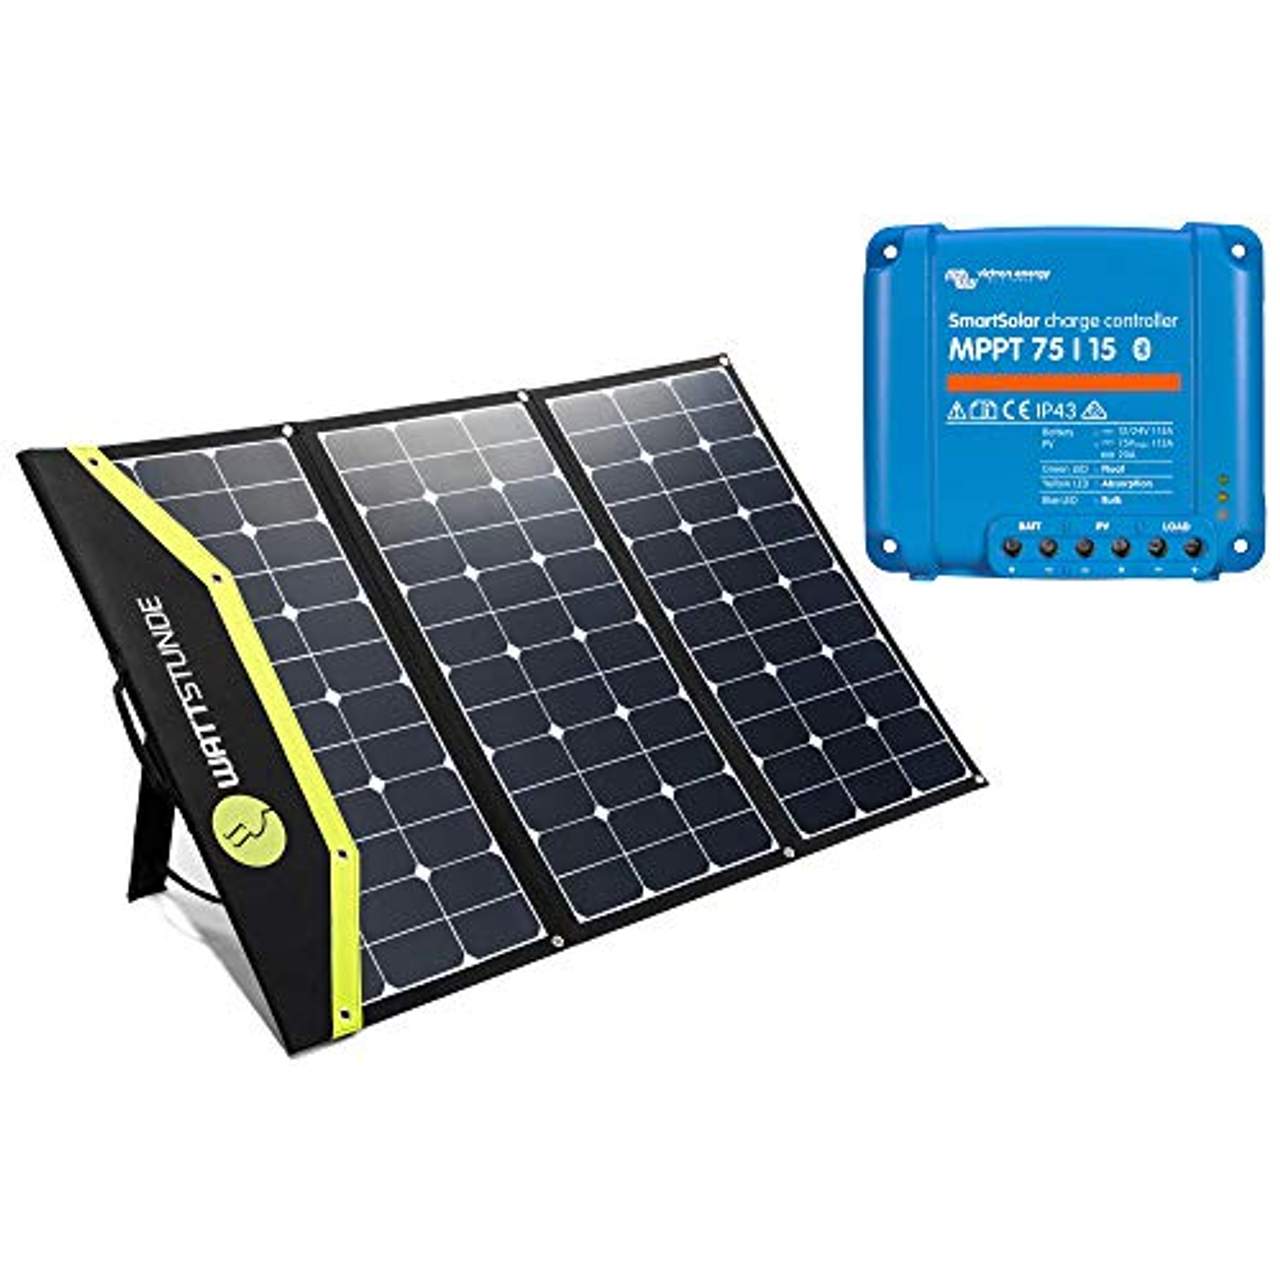 WATTSTUNDE Sunfolder Solartasche Mobiles 12V Outdoor Solarpanel 180 W